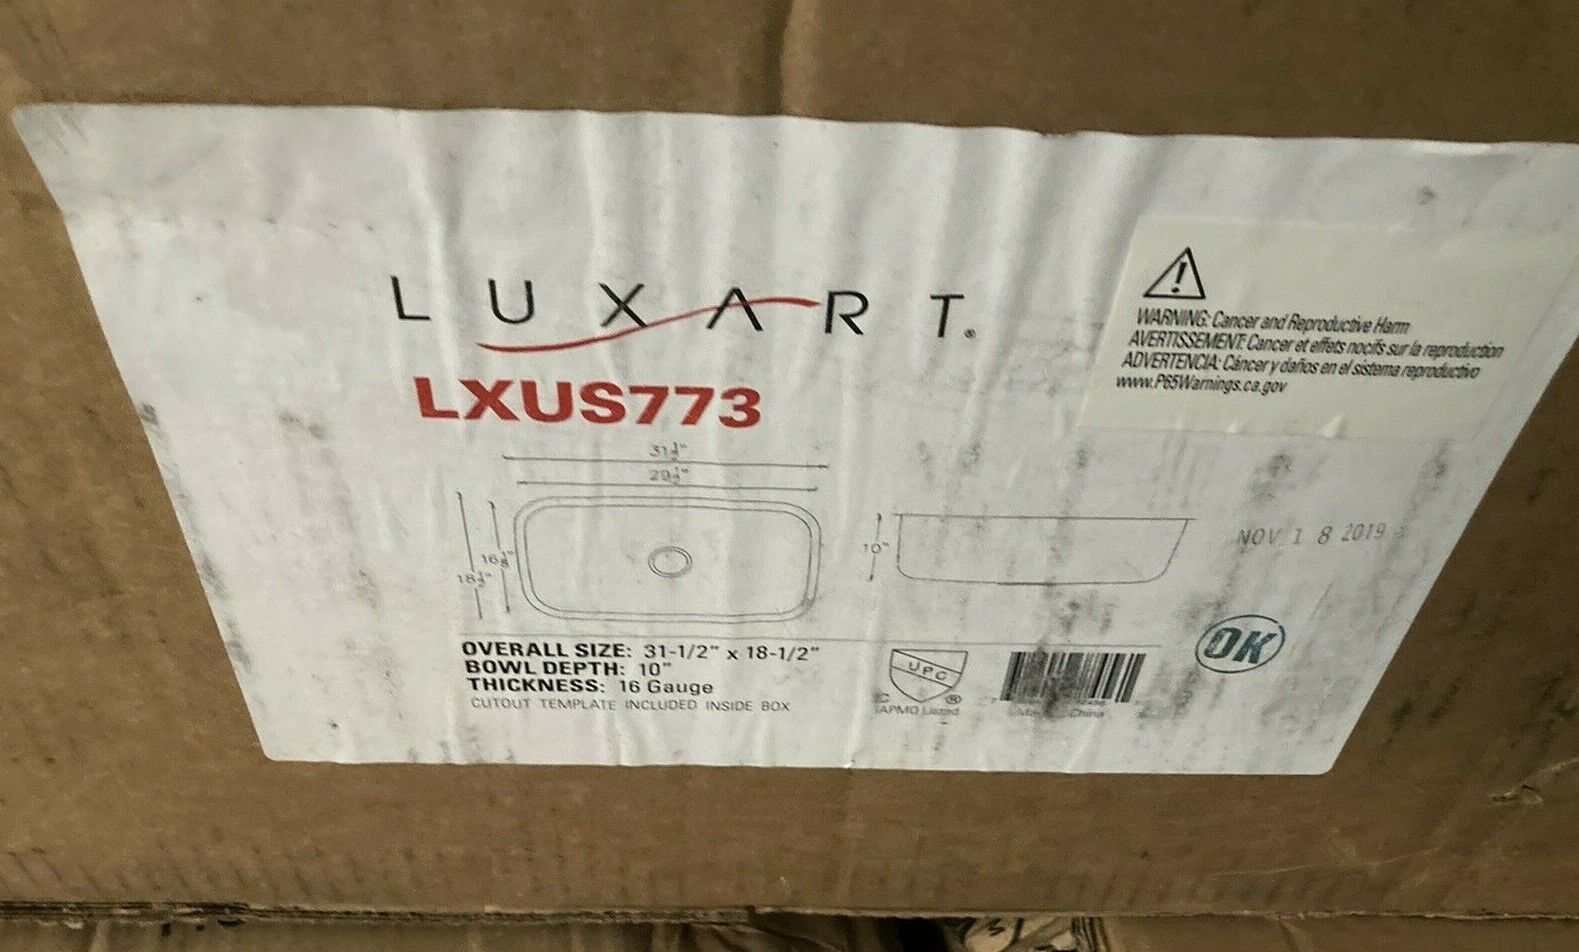 Luxart Lxus773 31-1/2" X 18-1/2" 1-bowl Undermount Kitchen Sink Brushed Satin